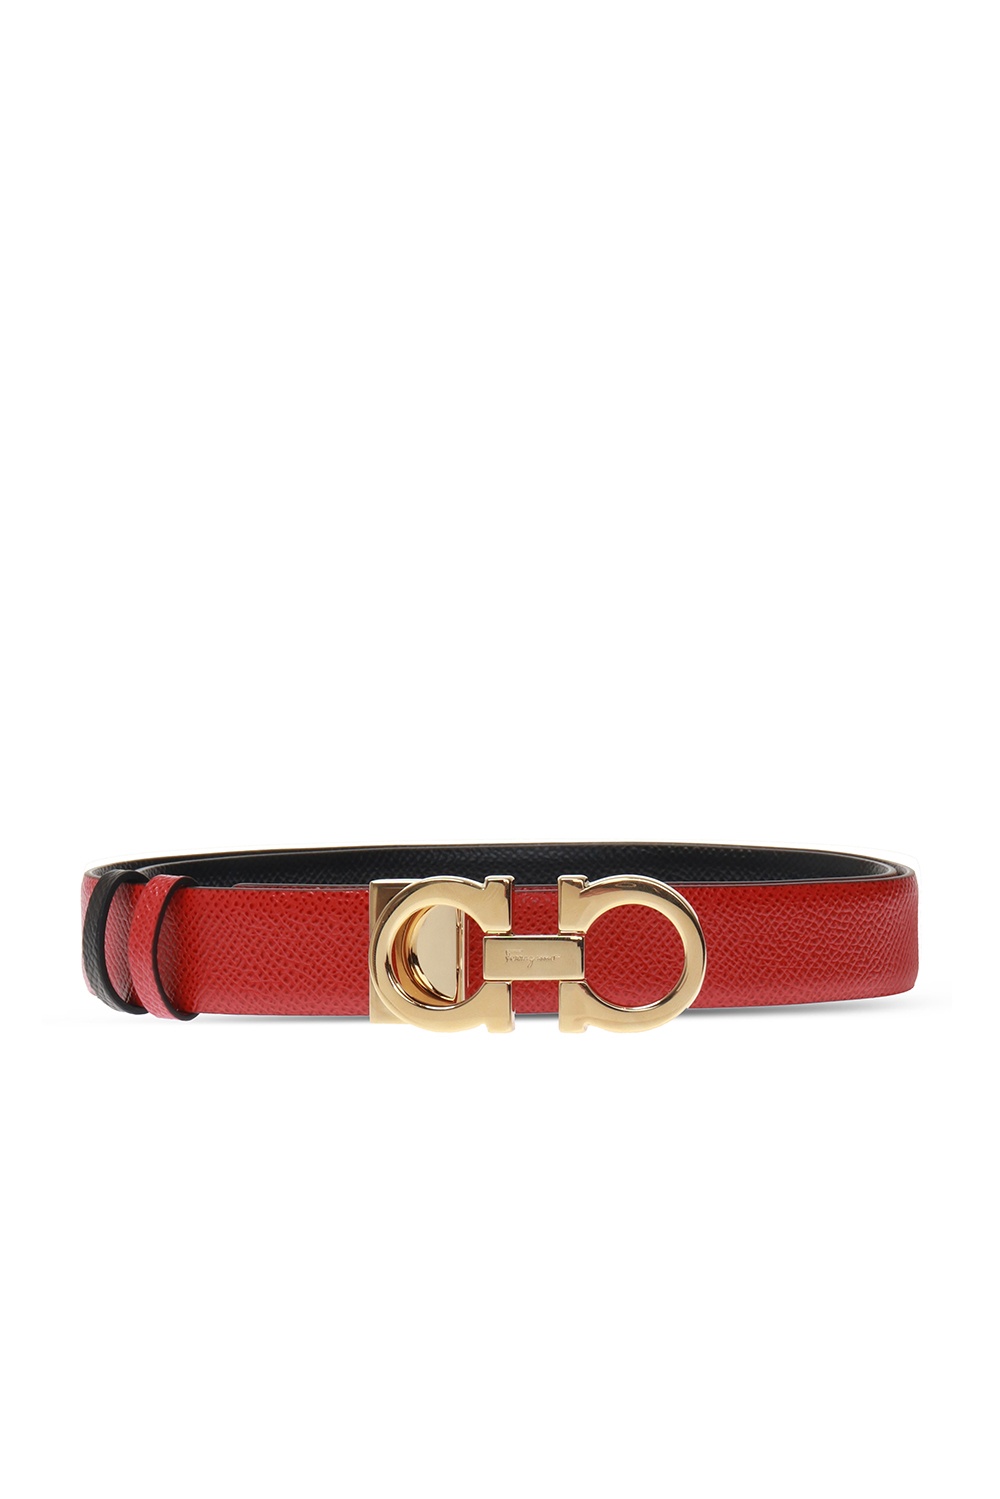 Ferragamo Belt in Red